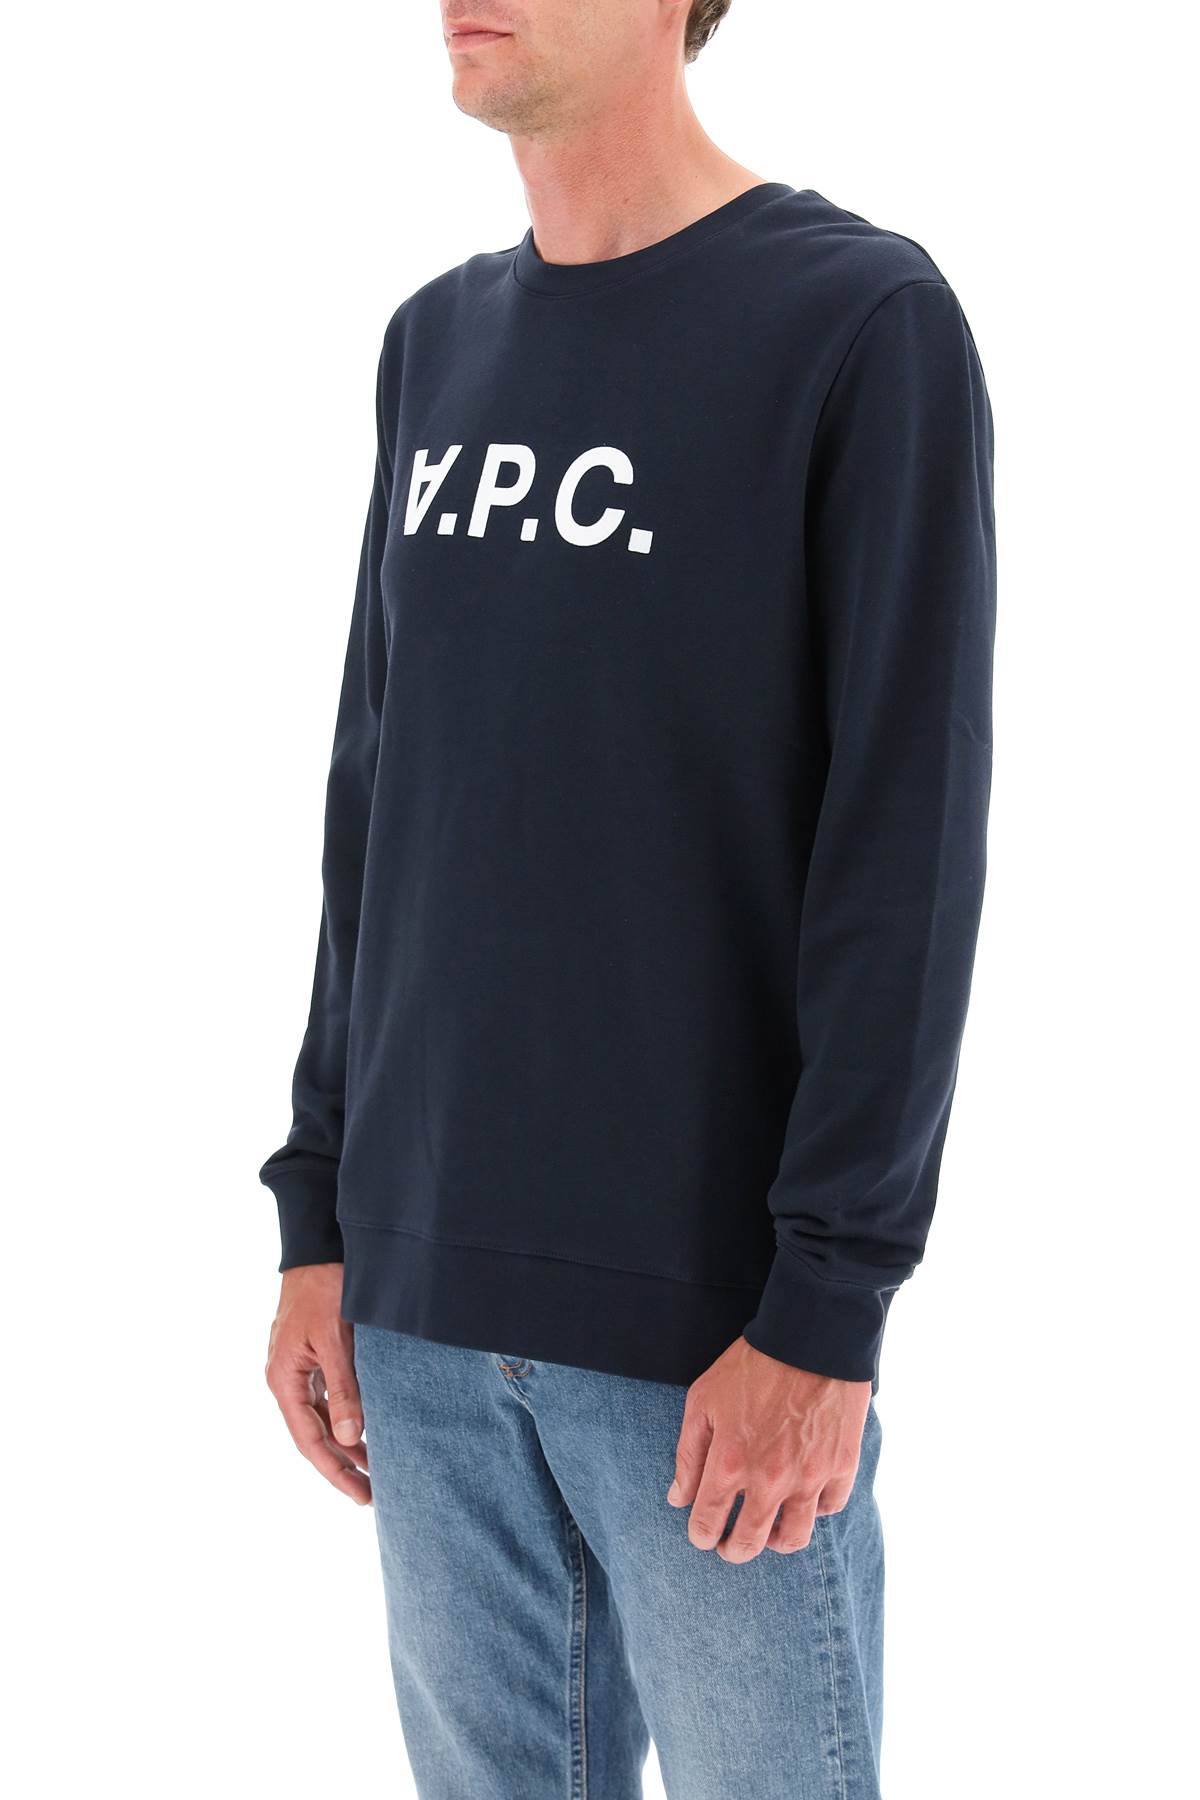 Shop Apc V.p.c. Flock Logo Sweatshirt In Blue